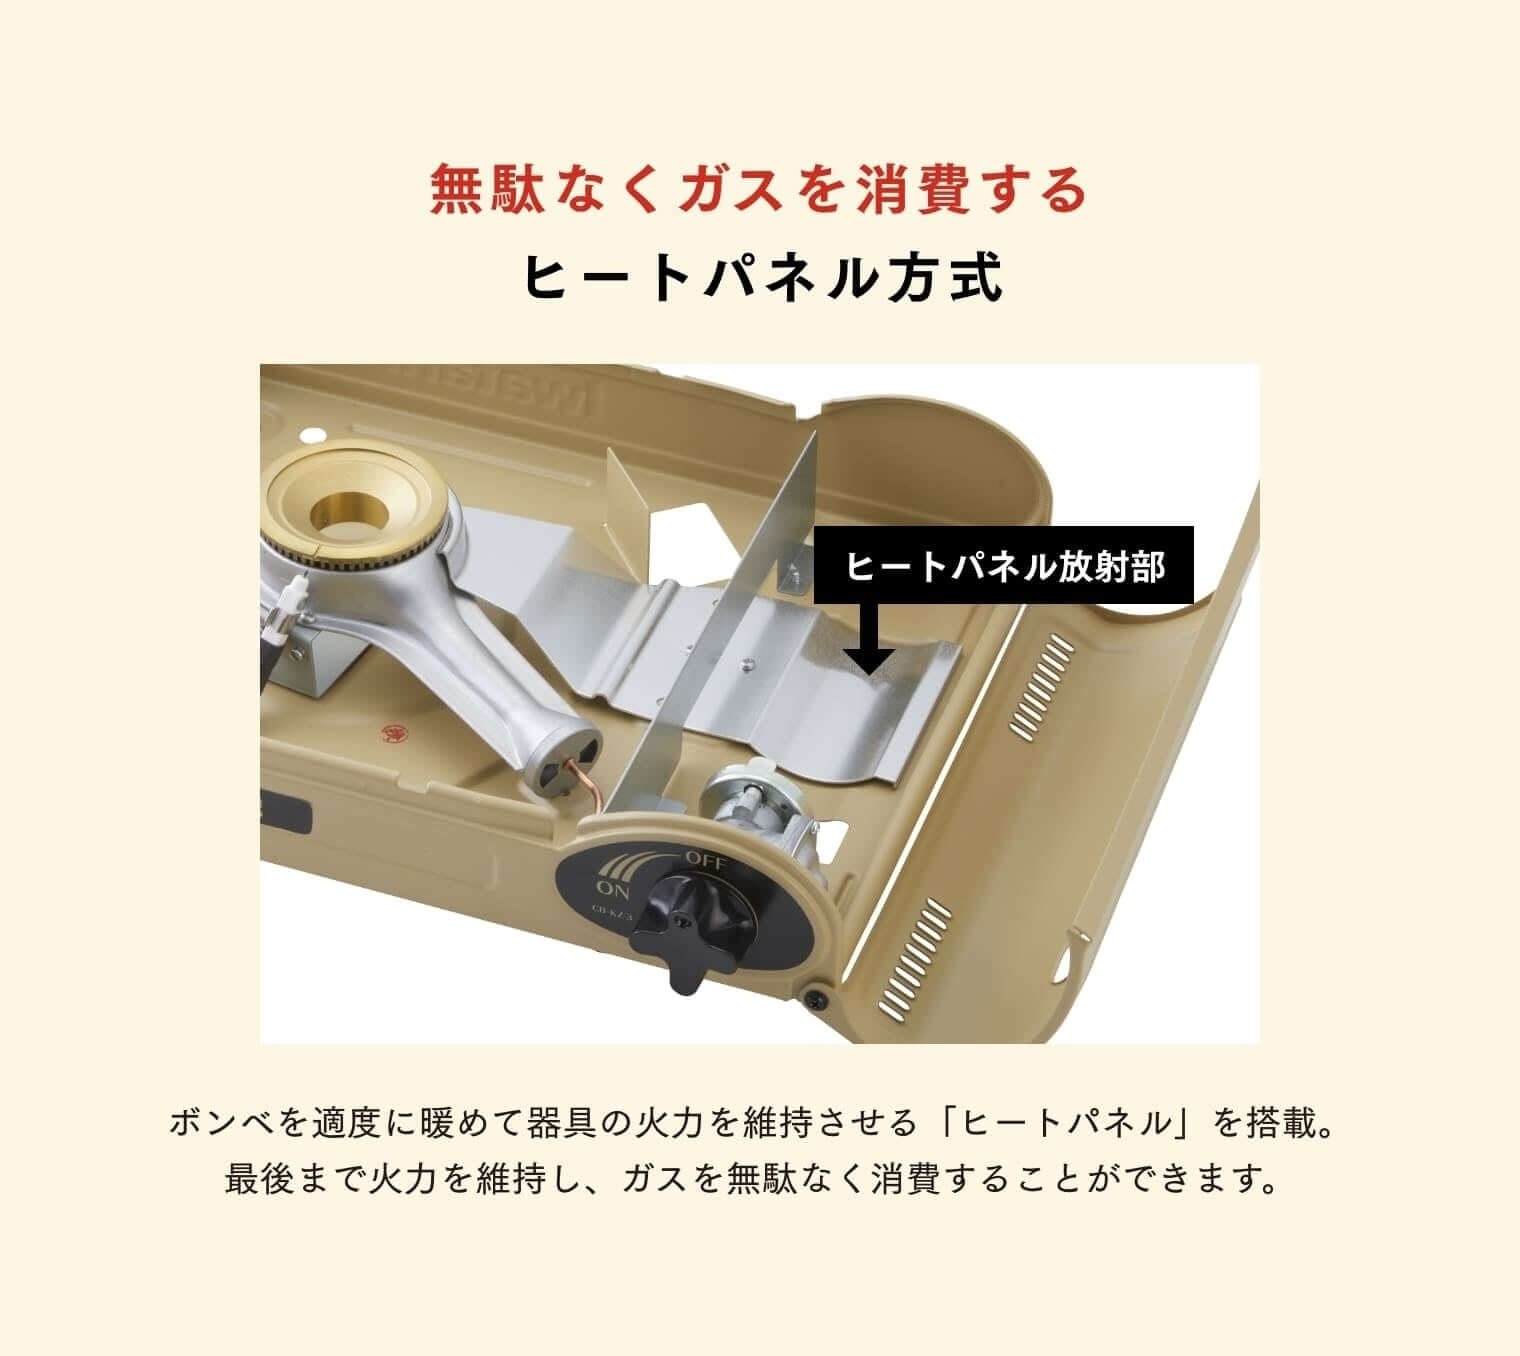 Iwatani - Cassette Fu Kazemaru III CB-KZ-3-Quality Foreign Outdoor and Camping Equipment-WhoWhy